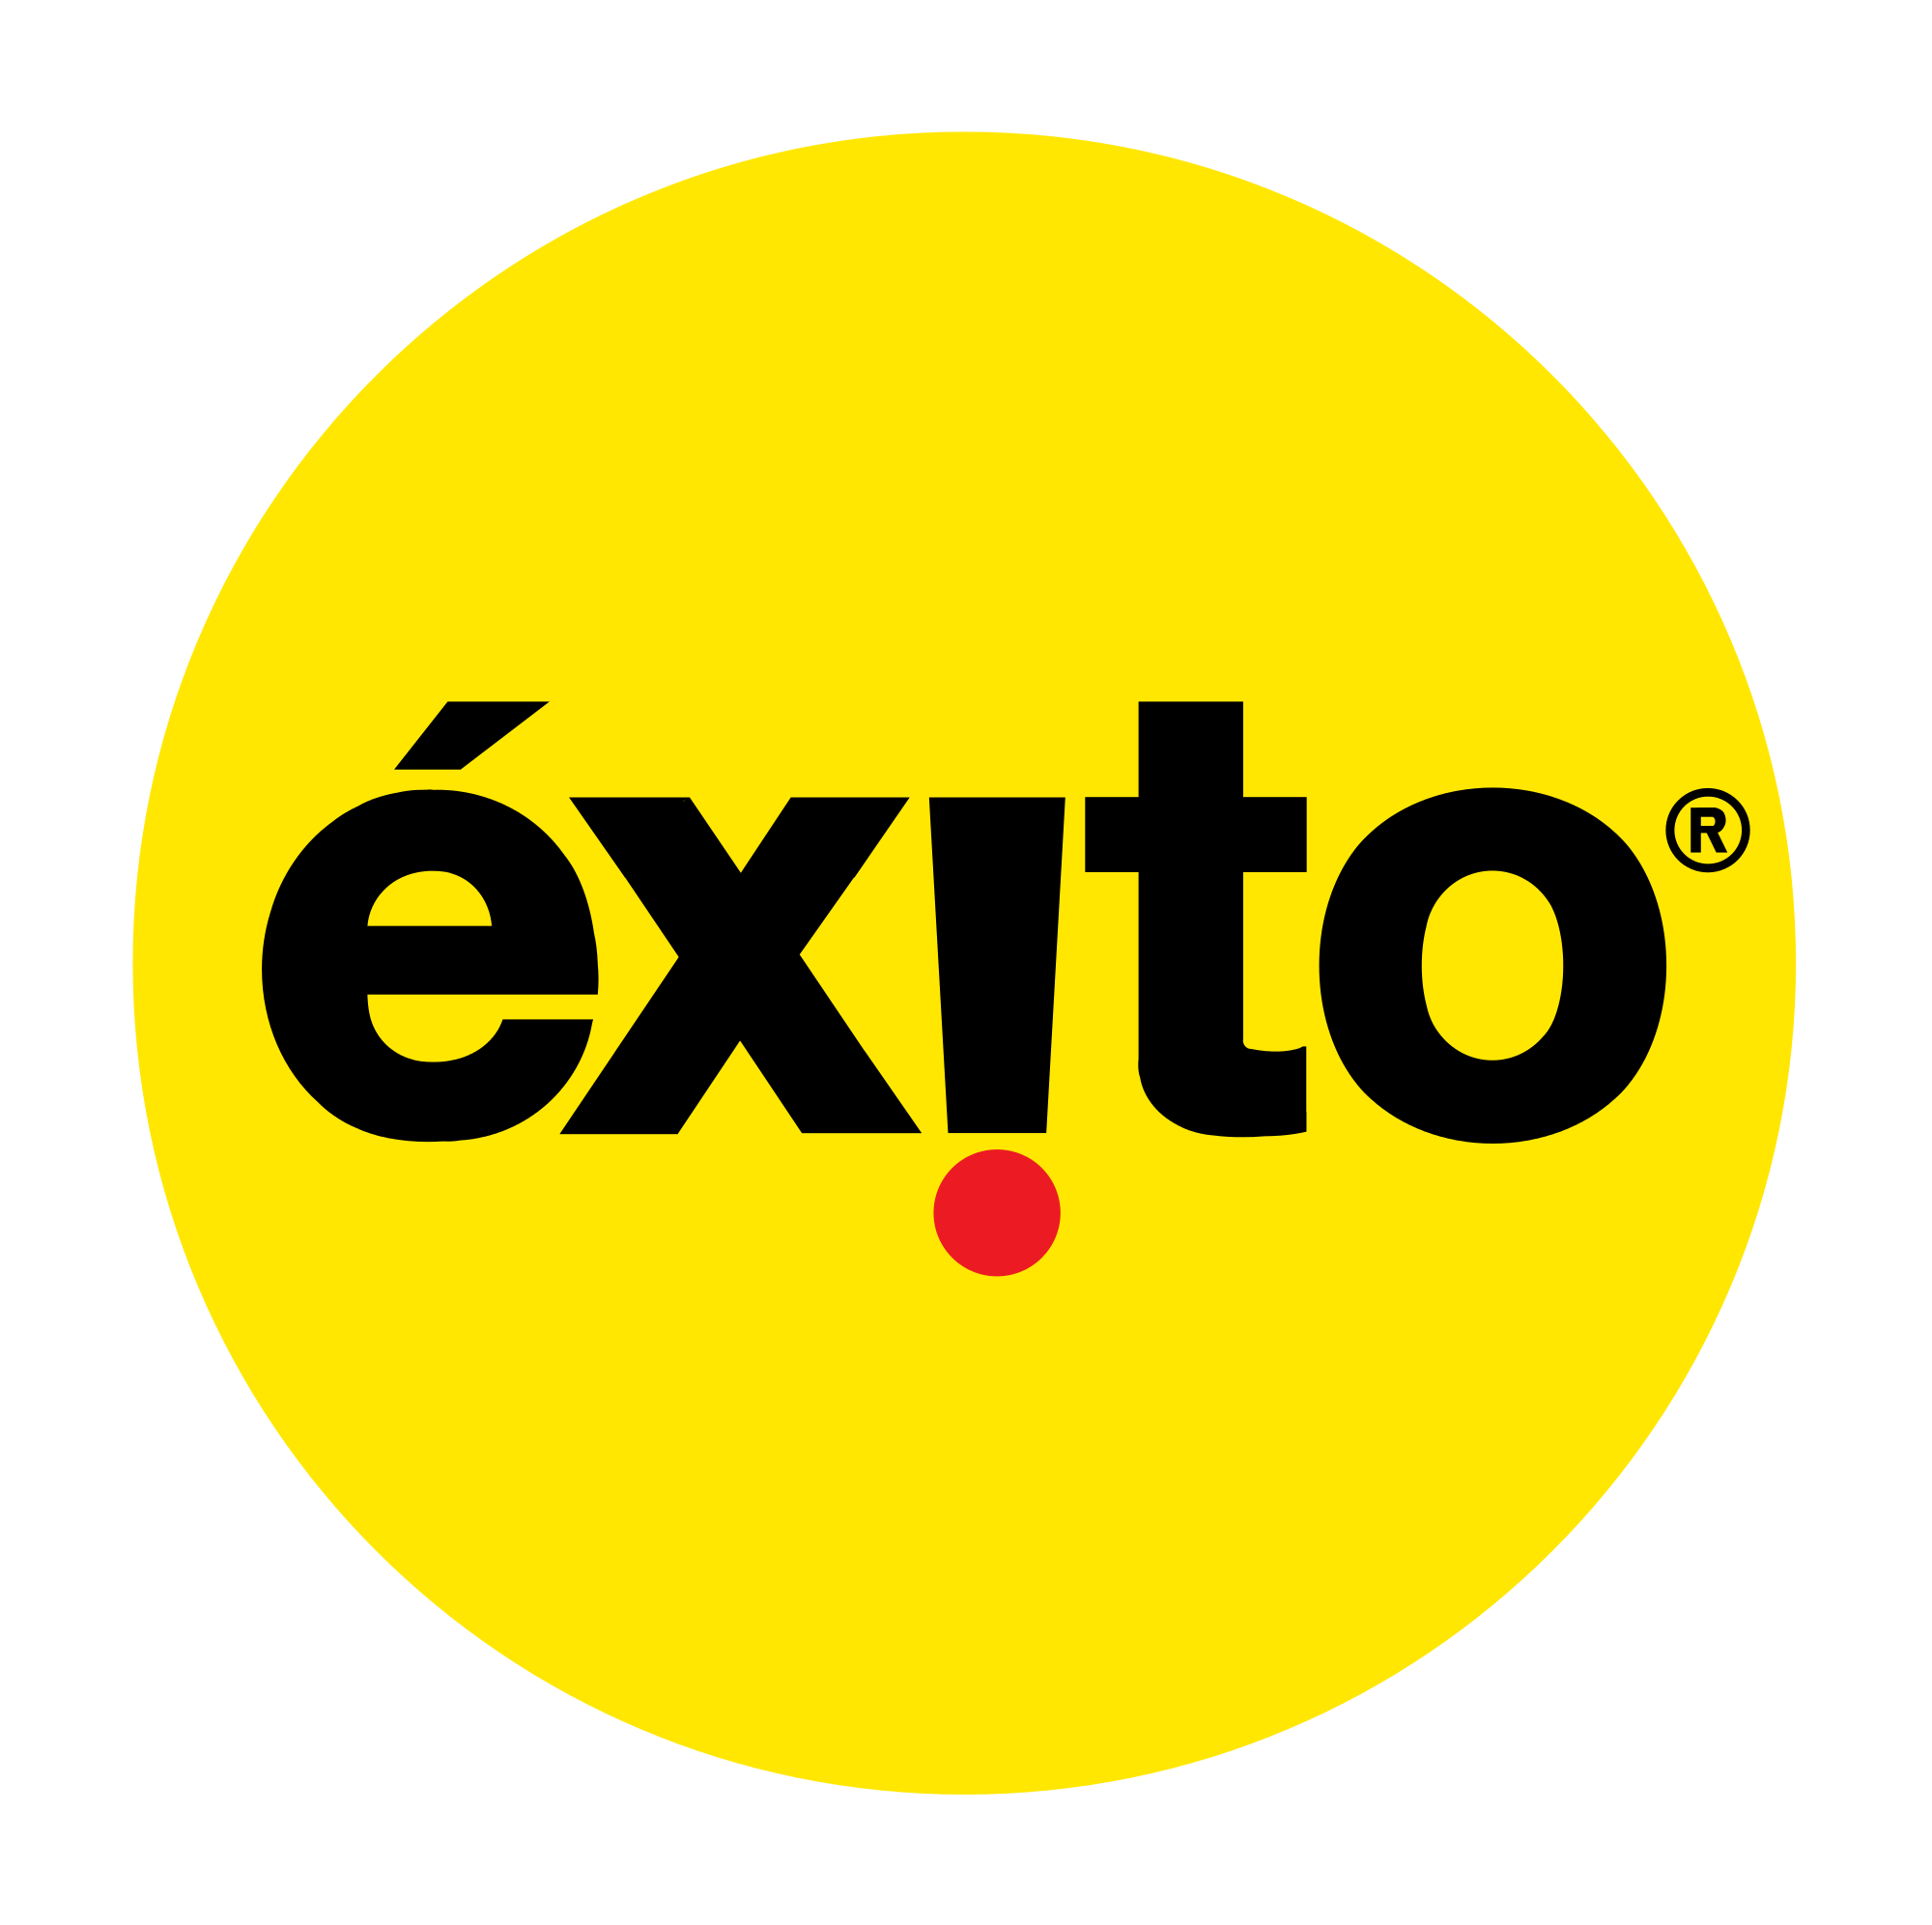 almacenes-exito-logo-png-open-2000